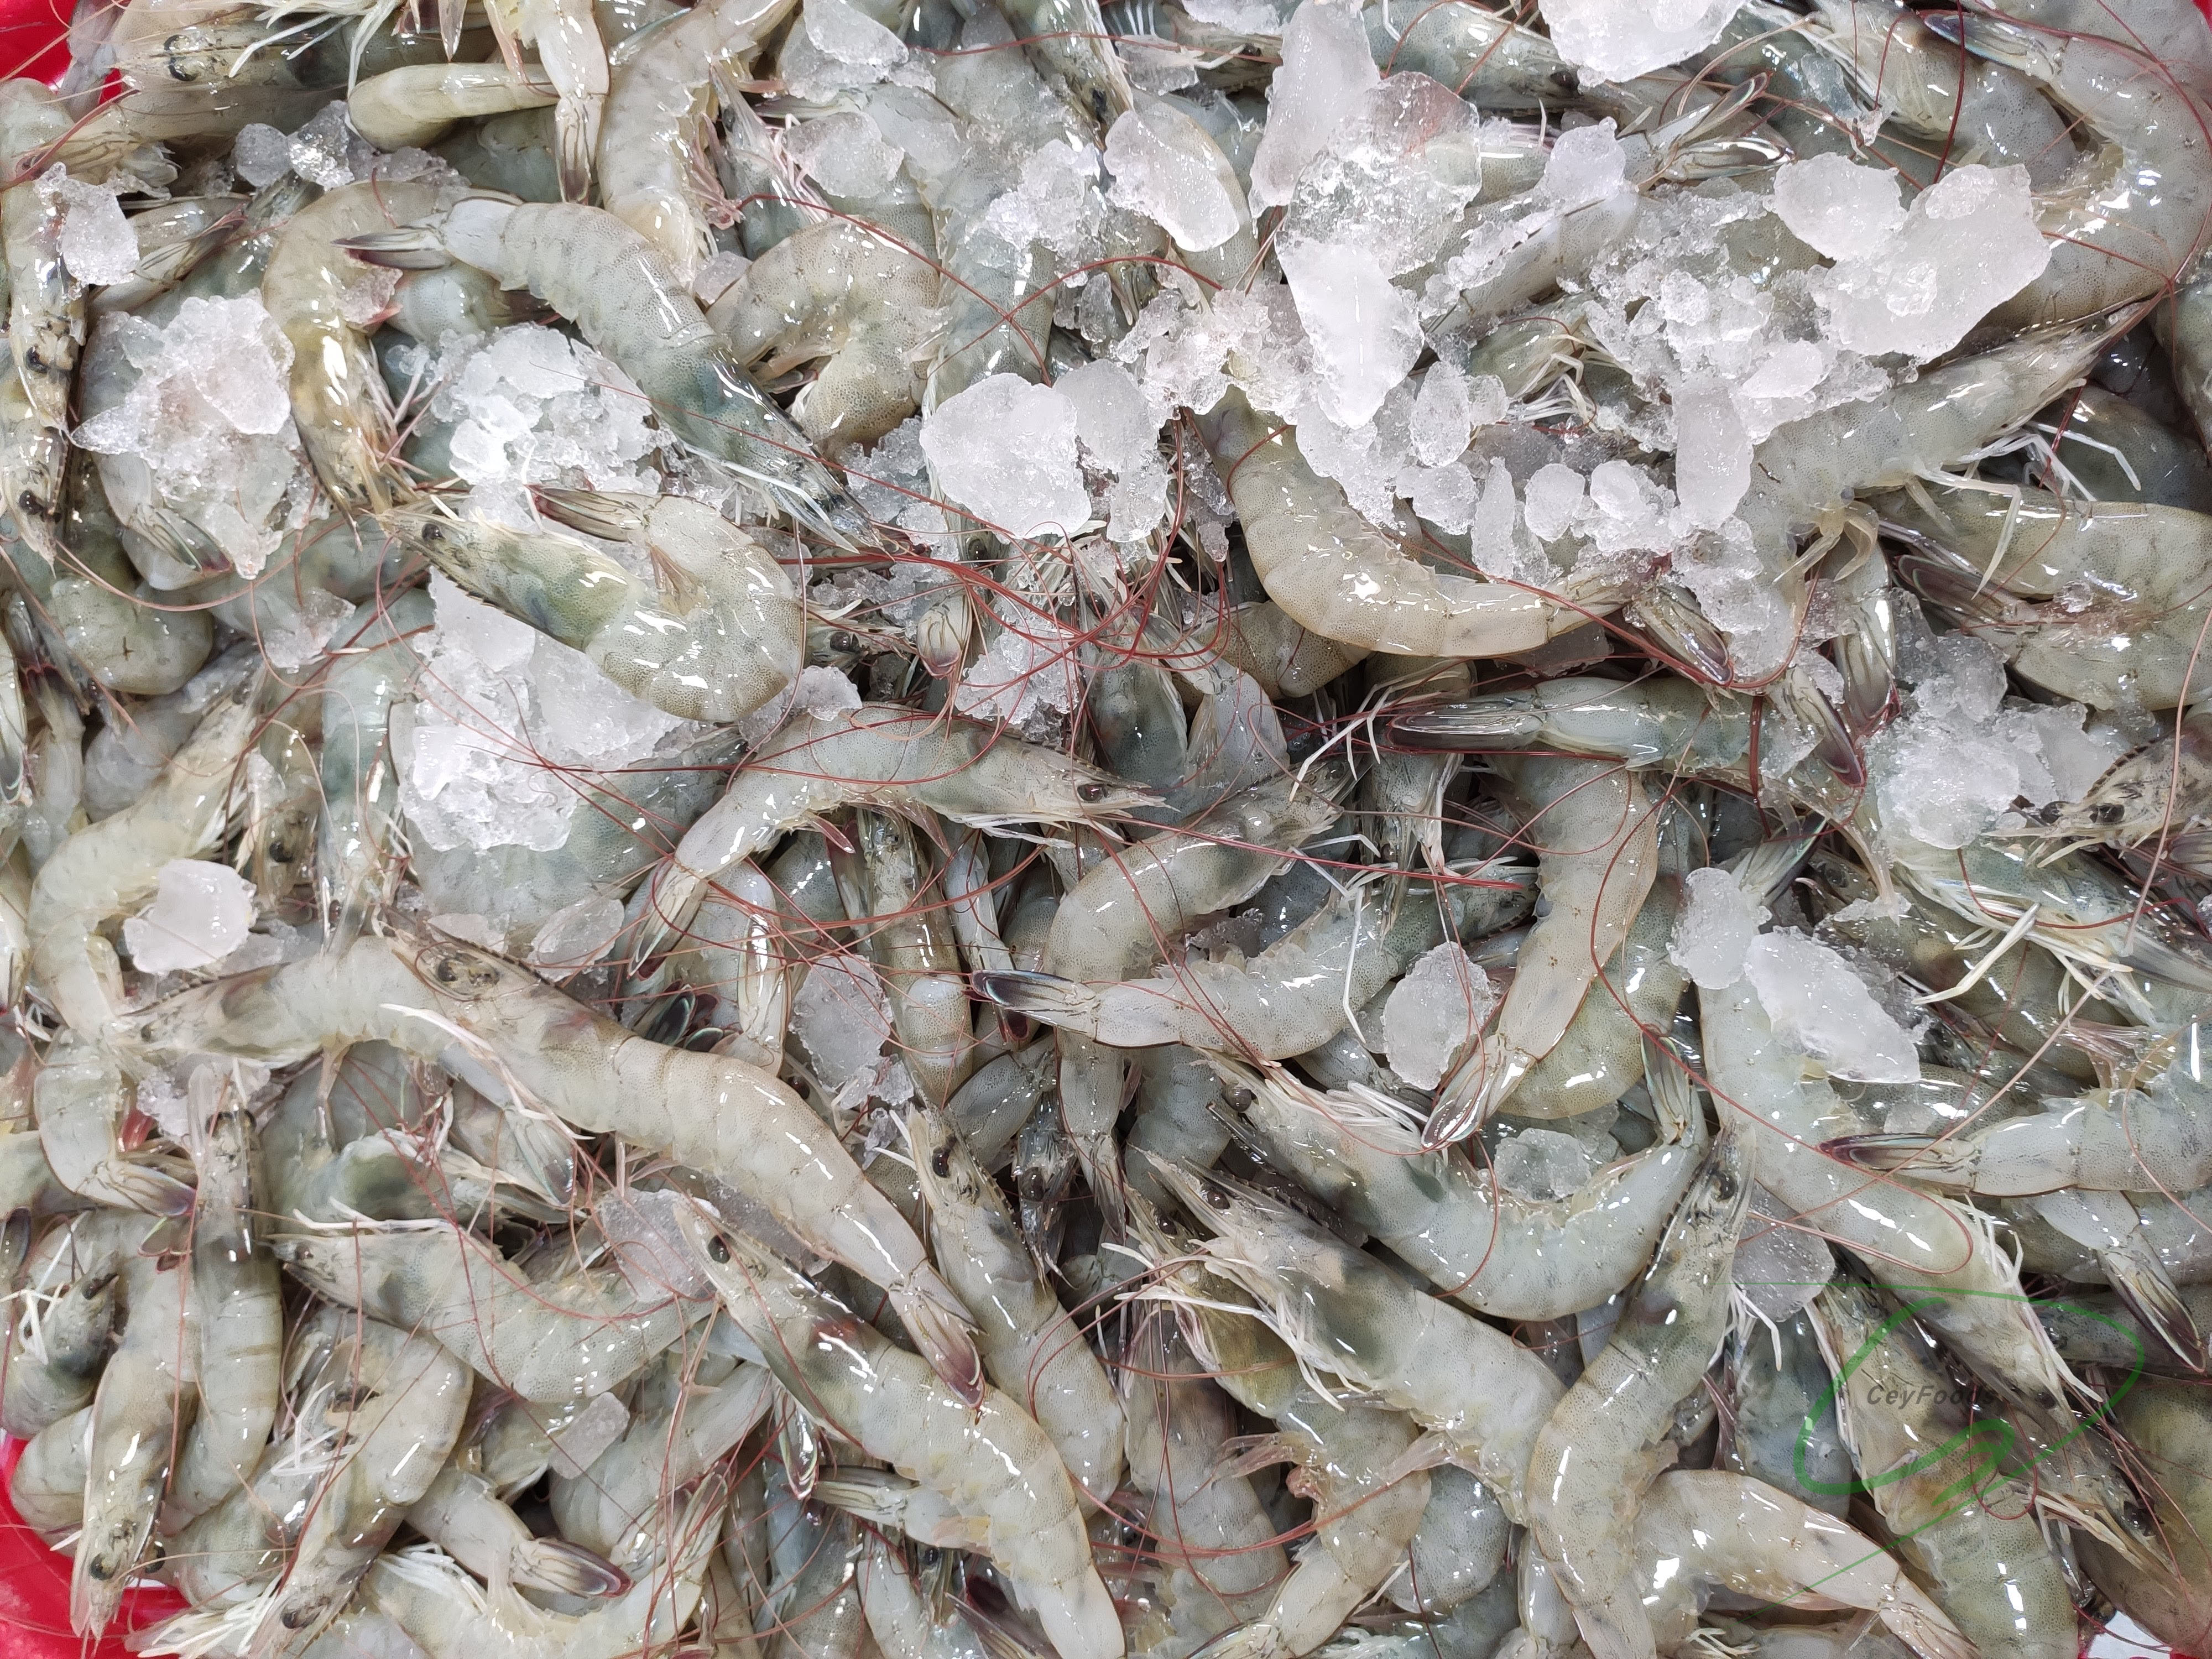 shrimp ceylon foods exports sri lanka ceyfoods seafood processor exporter